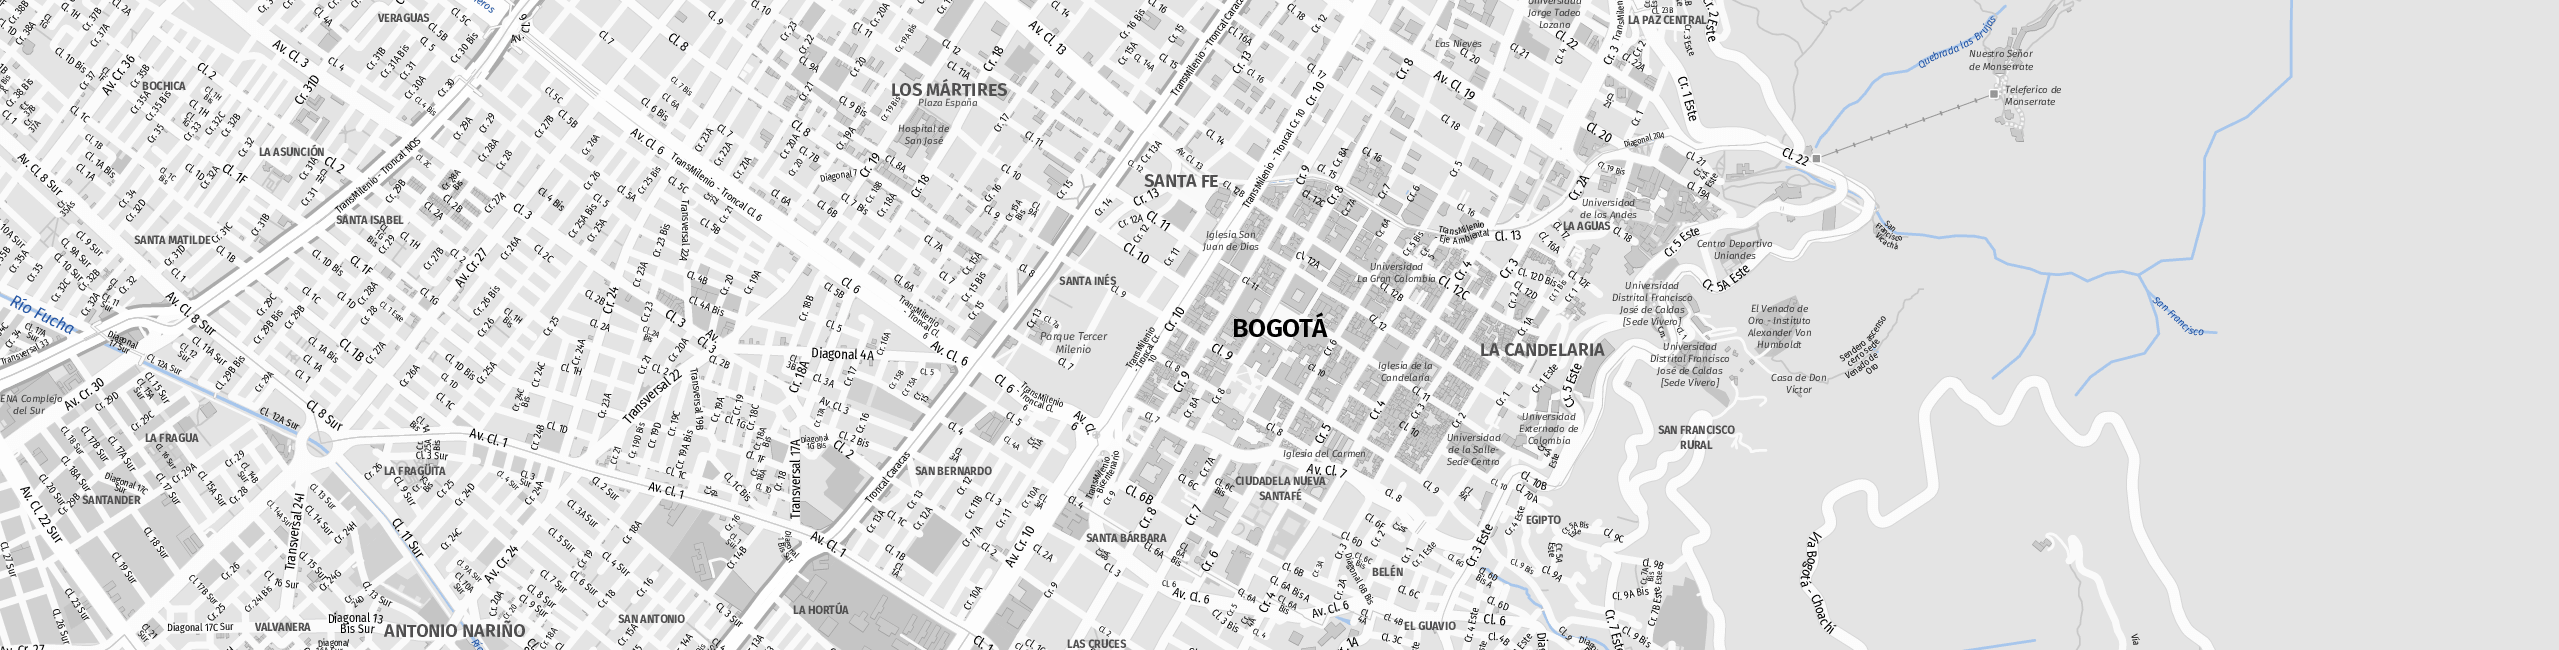 Stadtplan Bogotá zum Downloaden.